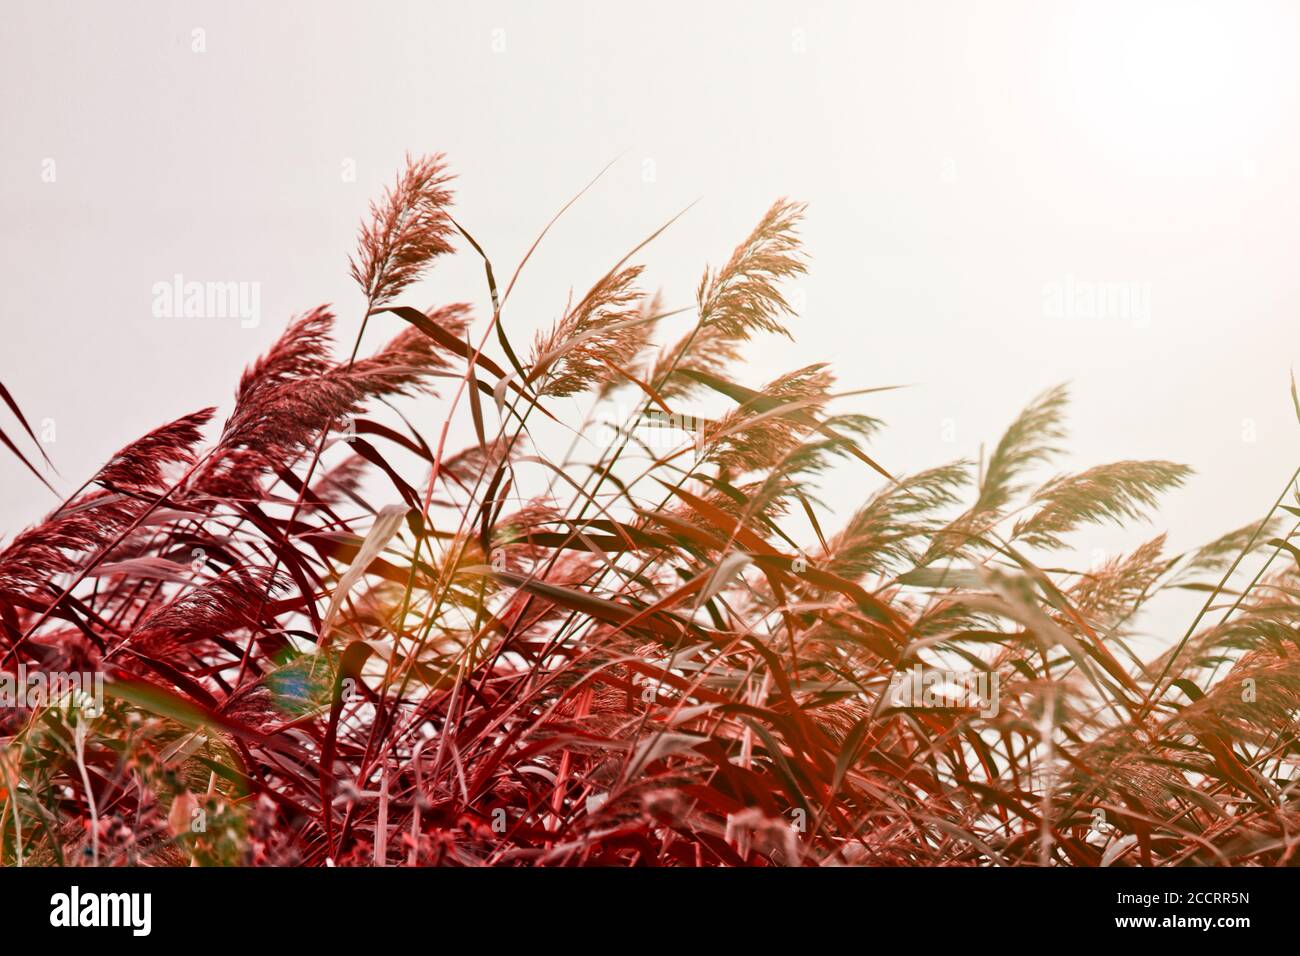 Autumn background - lake reeds with panicles of seeds. Coastal landscape. Stock Photo